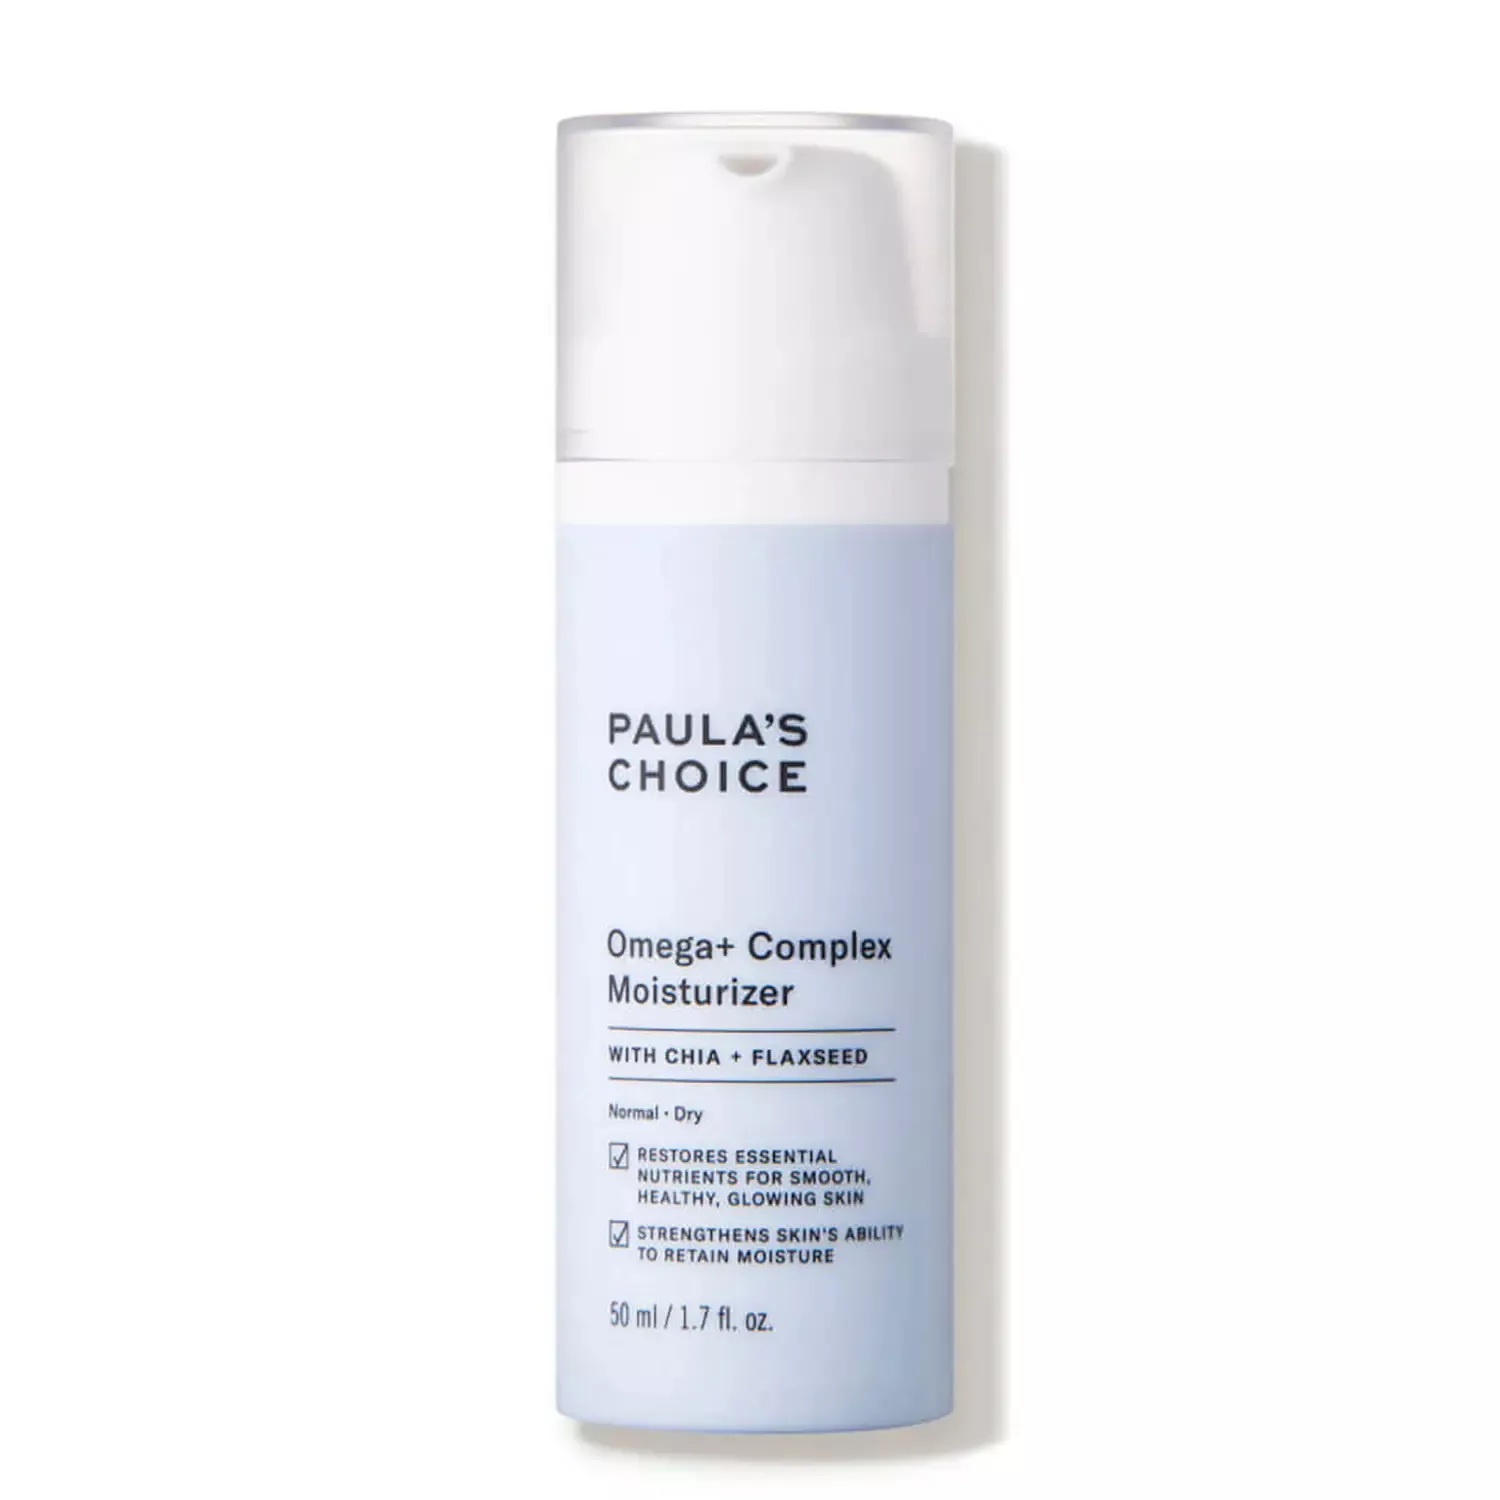 bottle of paula's choice omega+ complex moisturizer